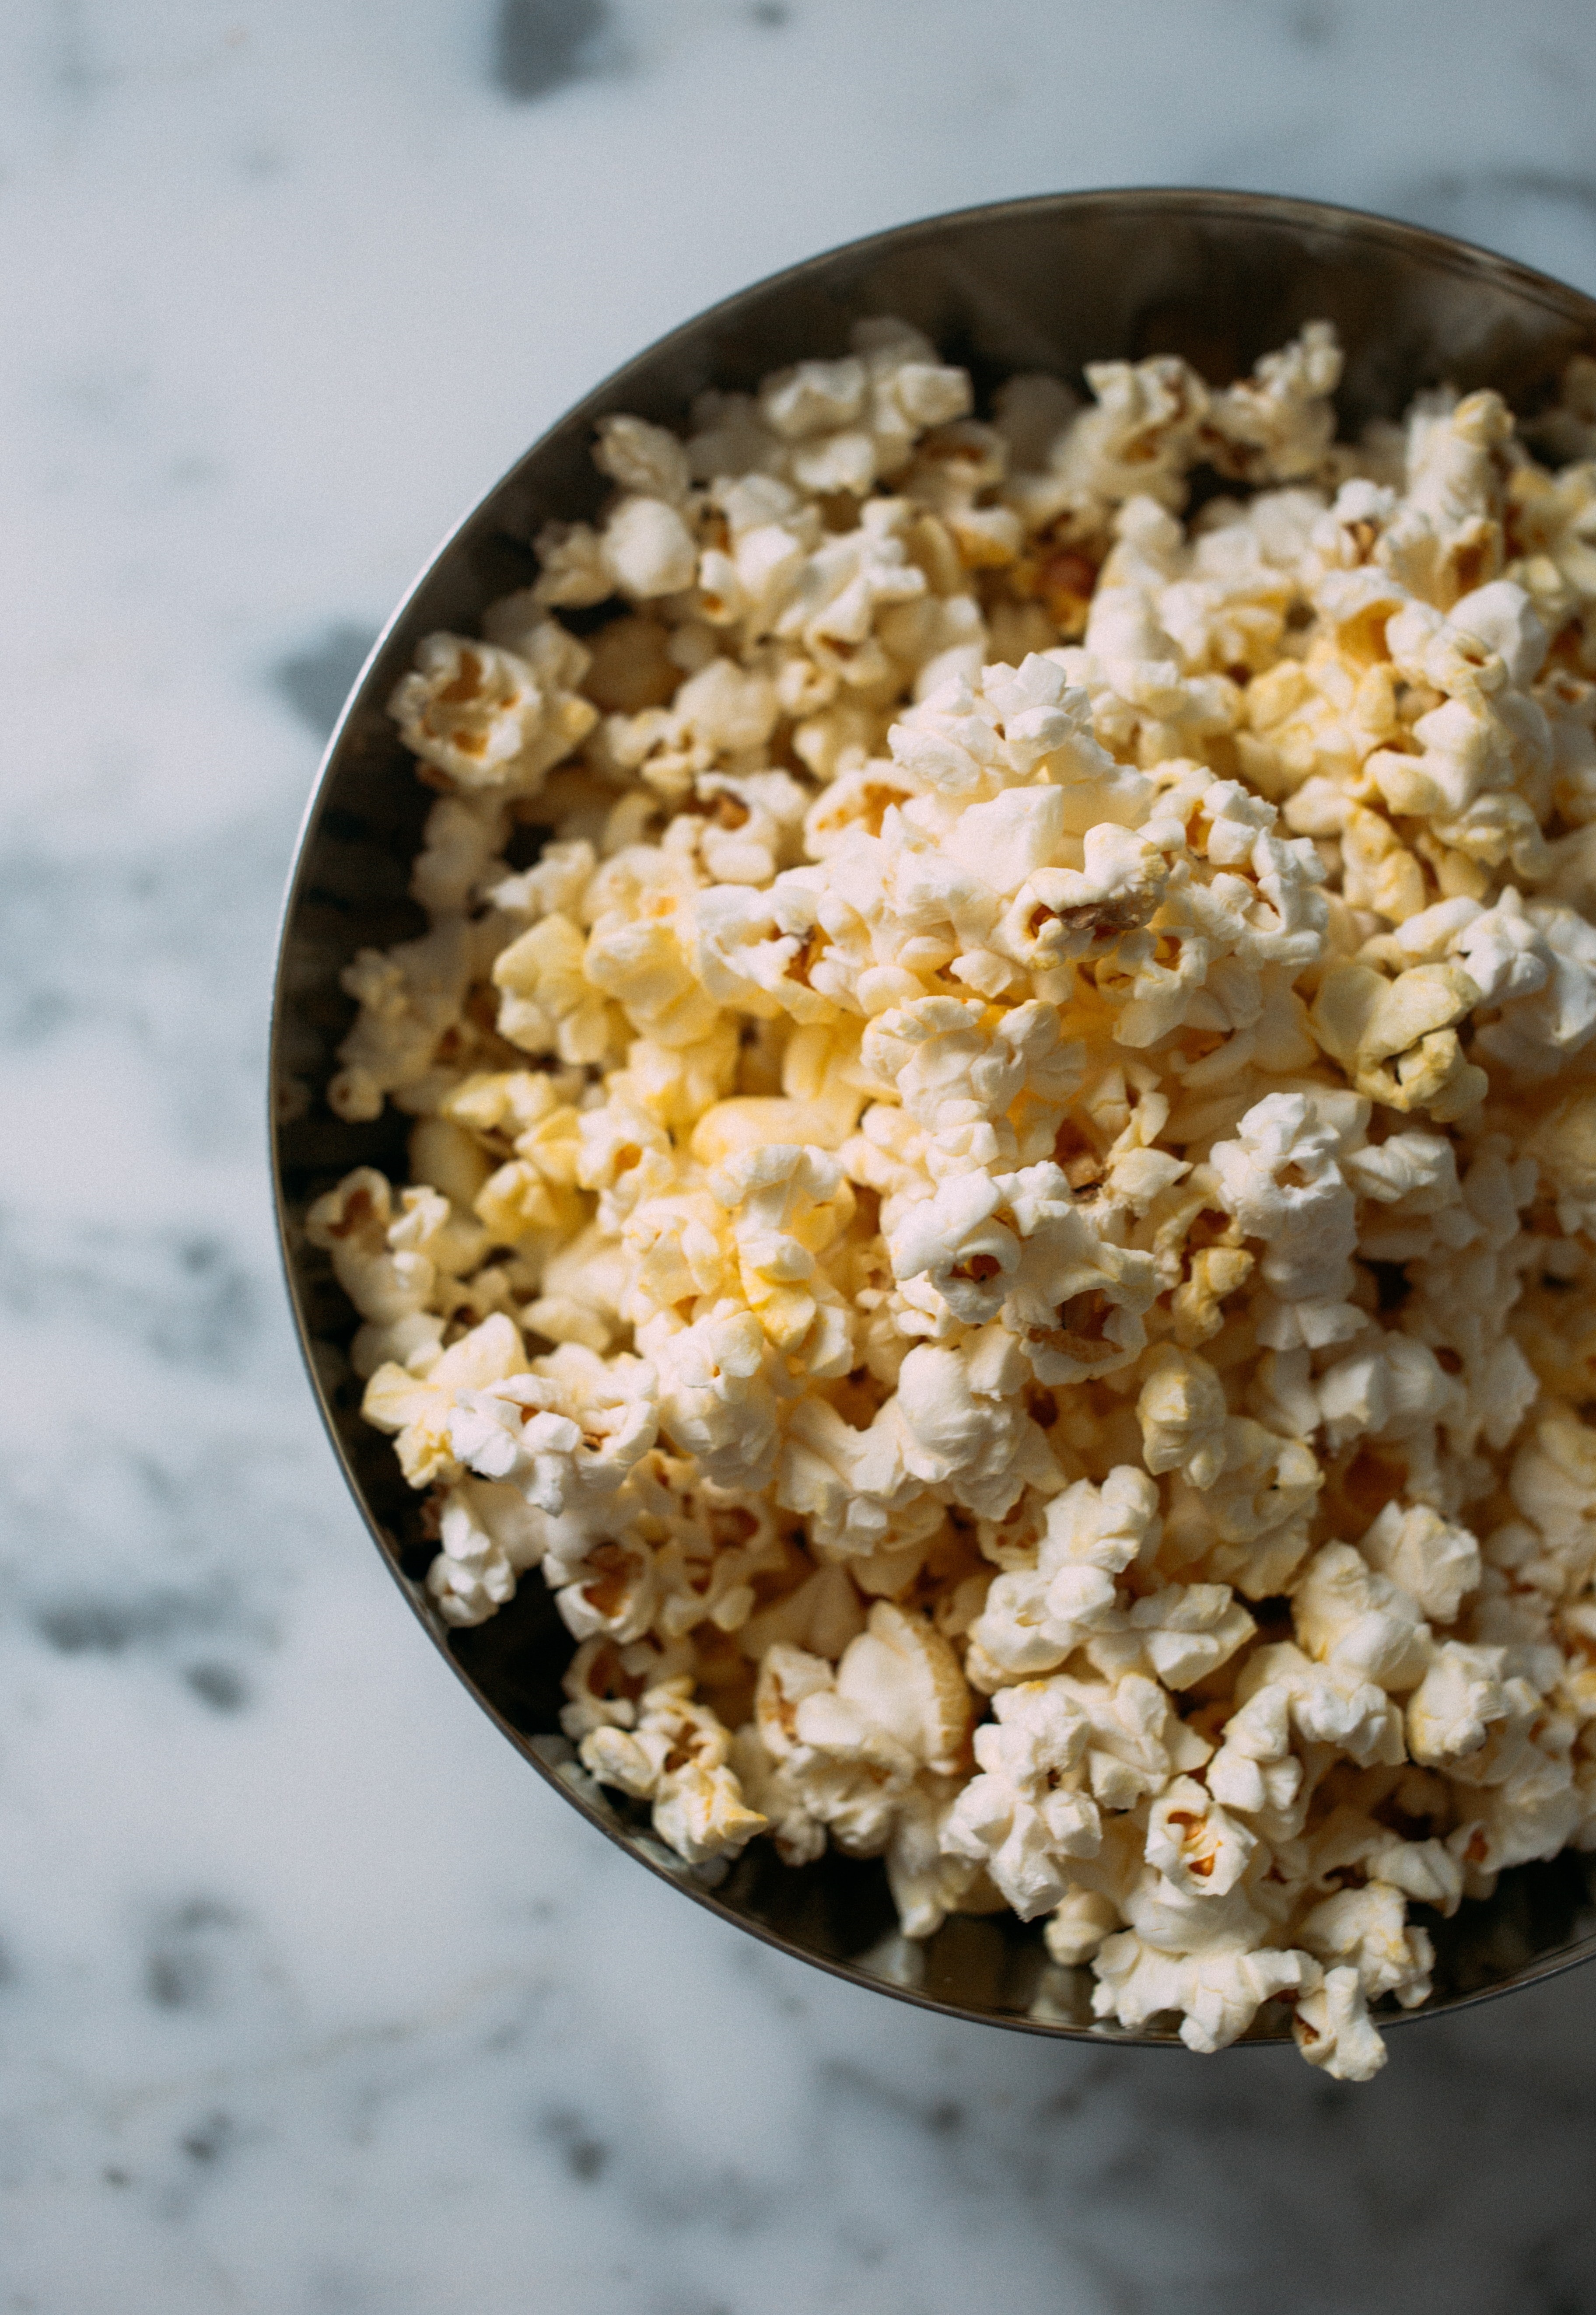 Popcorn(Unsplash)